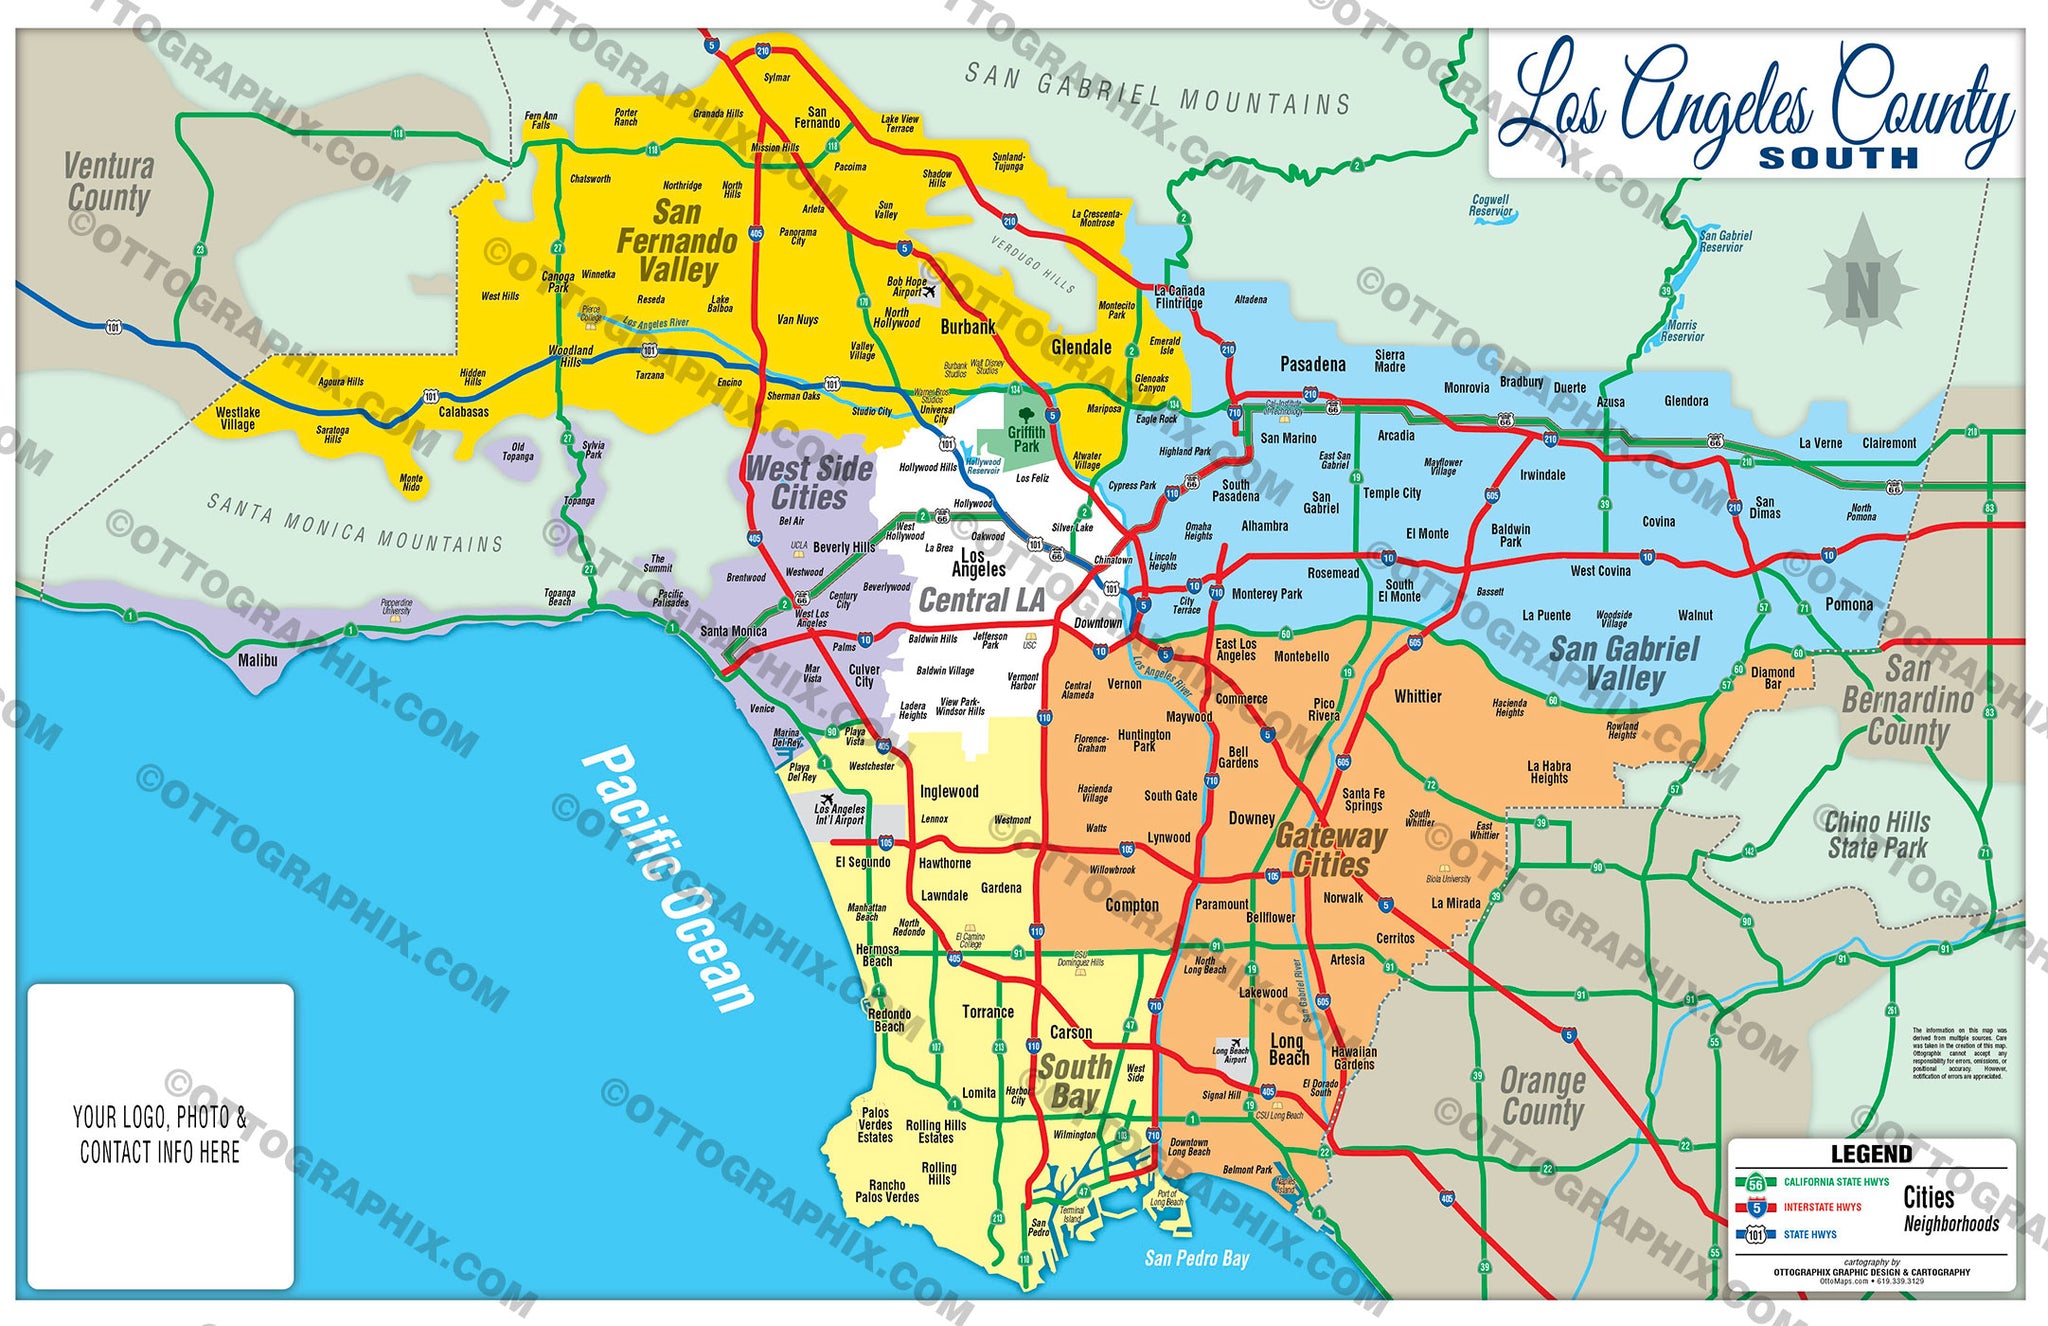 los angeles city zip code map Los Angeles County Map South No Zip Codes Otto Maps los angeles city zip code map